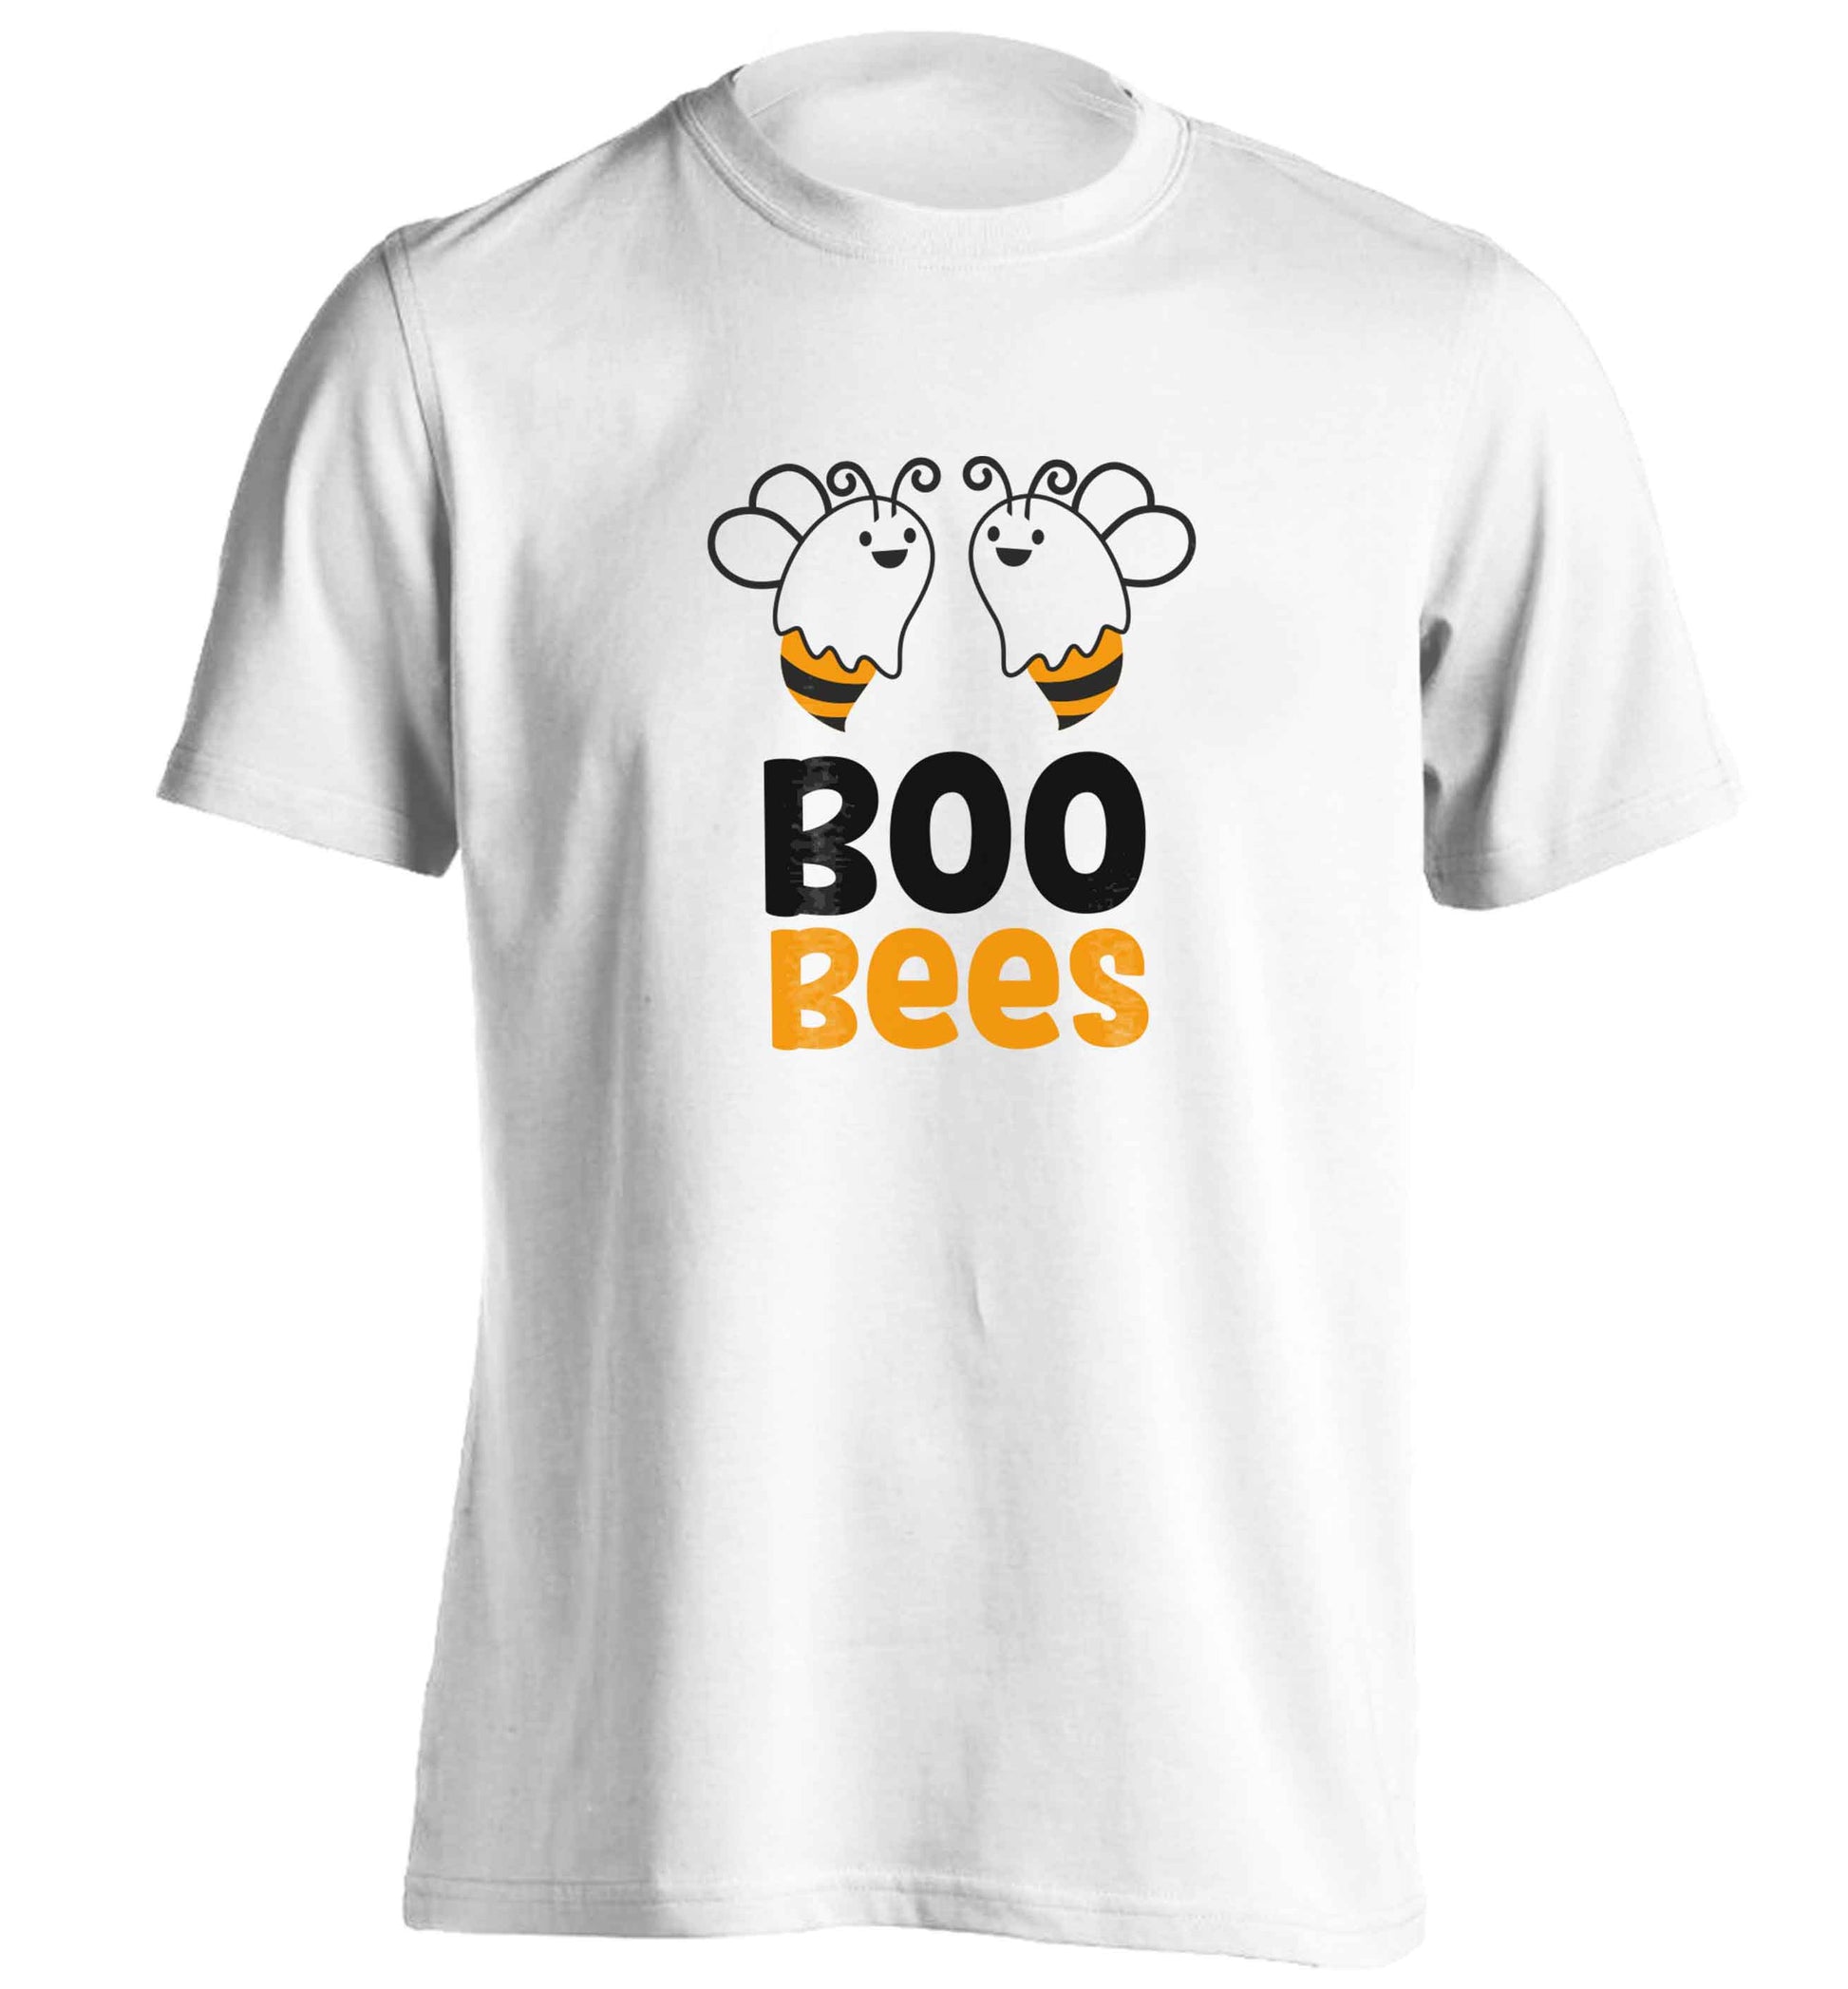 Boo bees Kit adults unisex white Tshirt 2XL